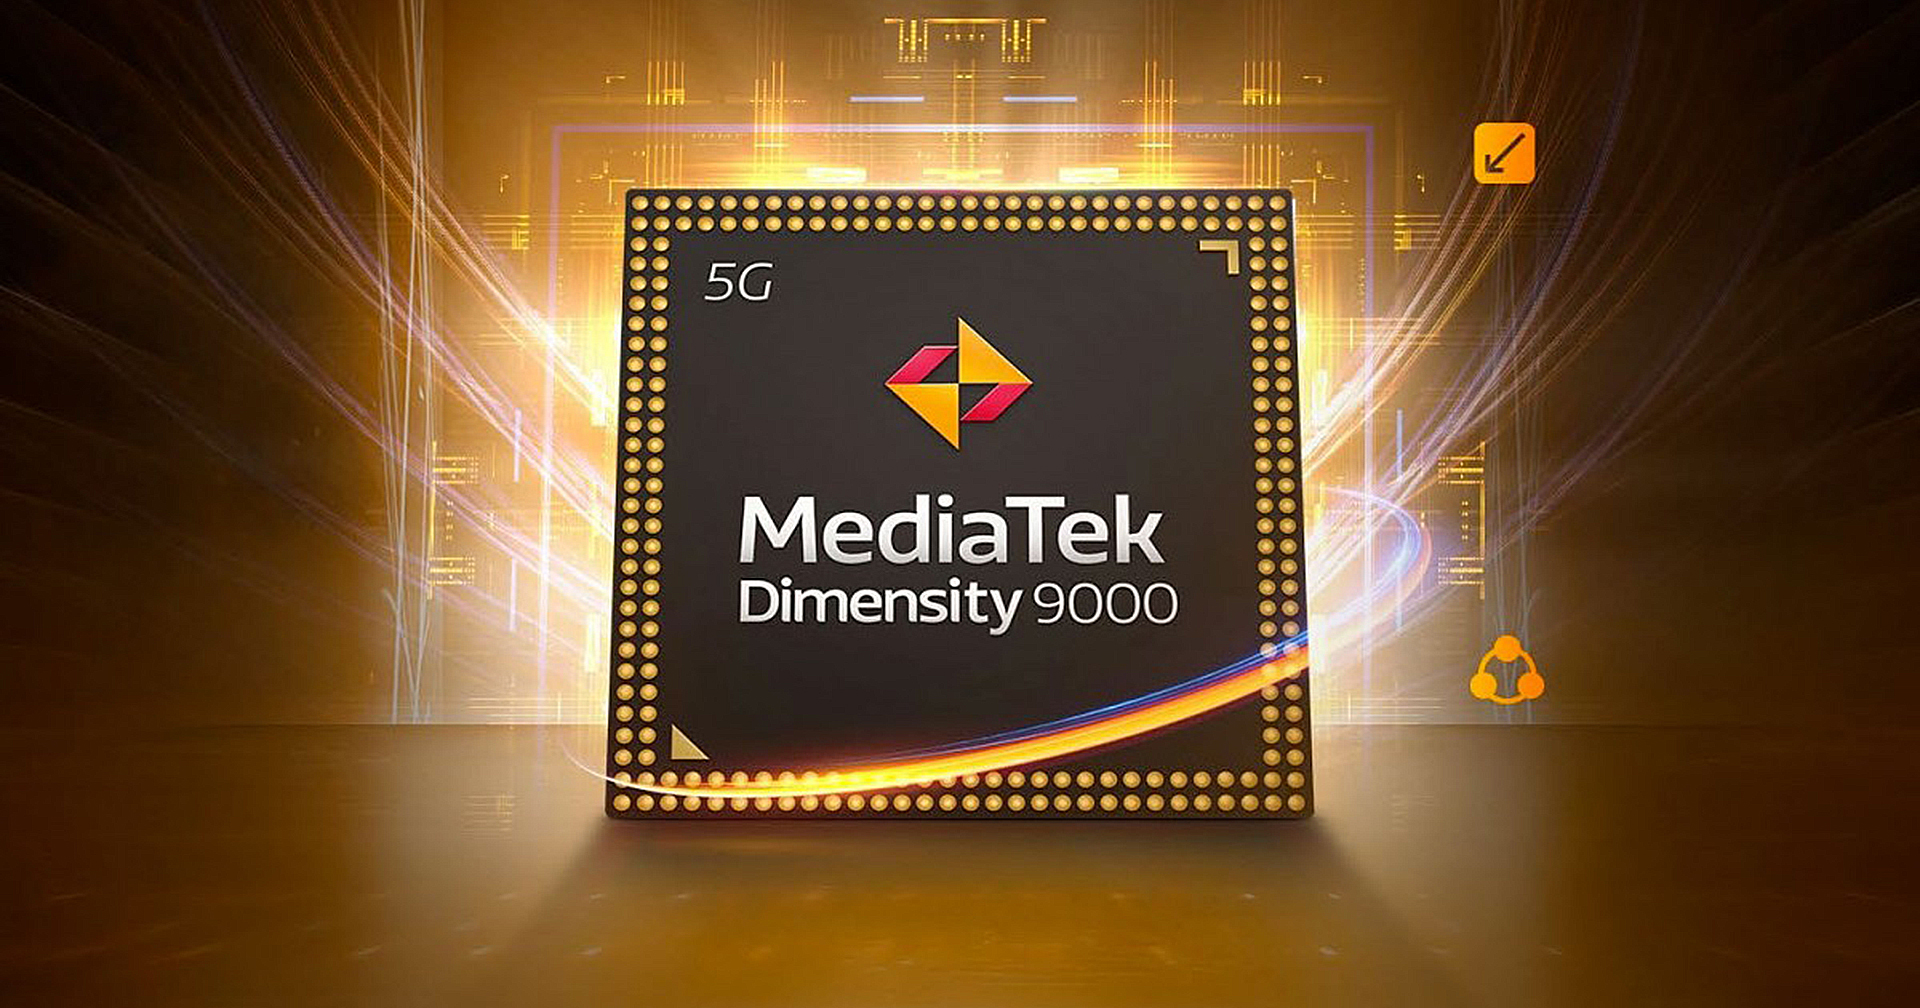 MediaTek รายได้เพิ่มขึ้น 33% จากยอดขาย Dimensity 8000 และ 9000